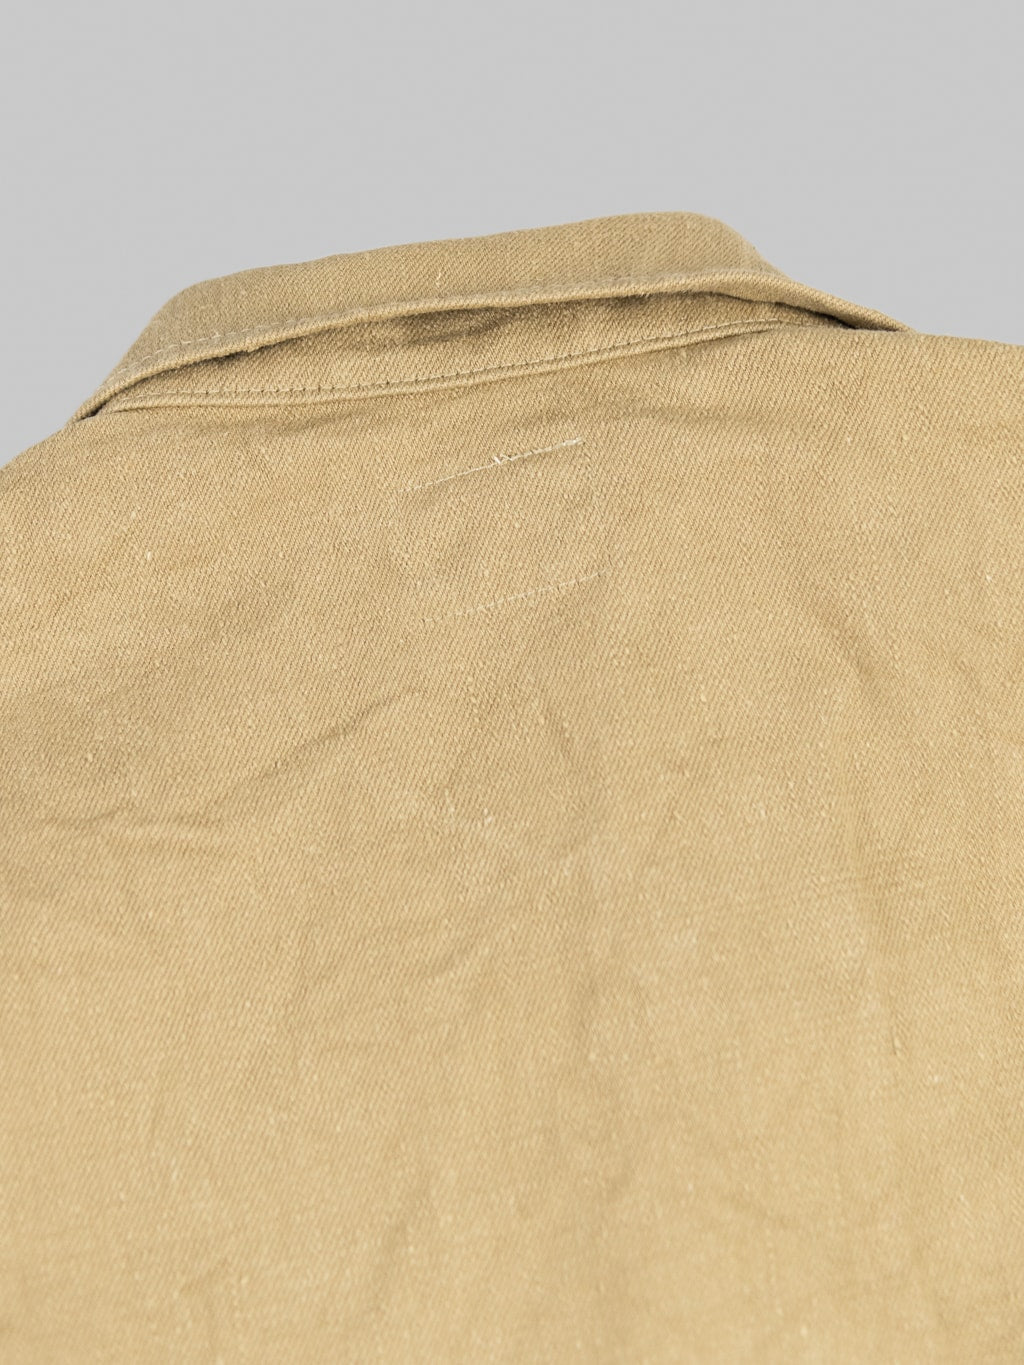 ONI Denim 03501 Sulfur Coverall Jacket Khaki Beige dyed fabric